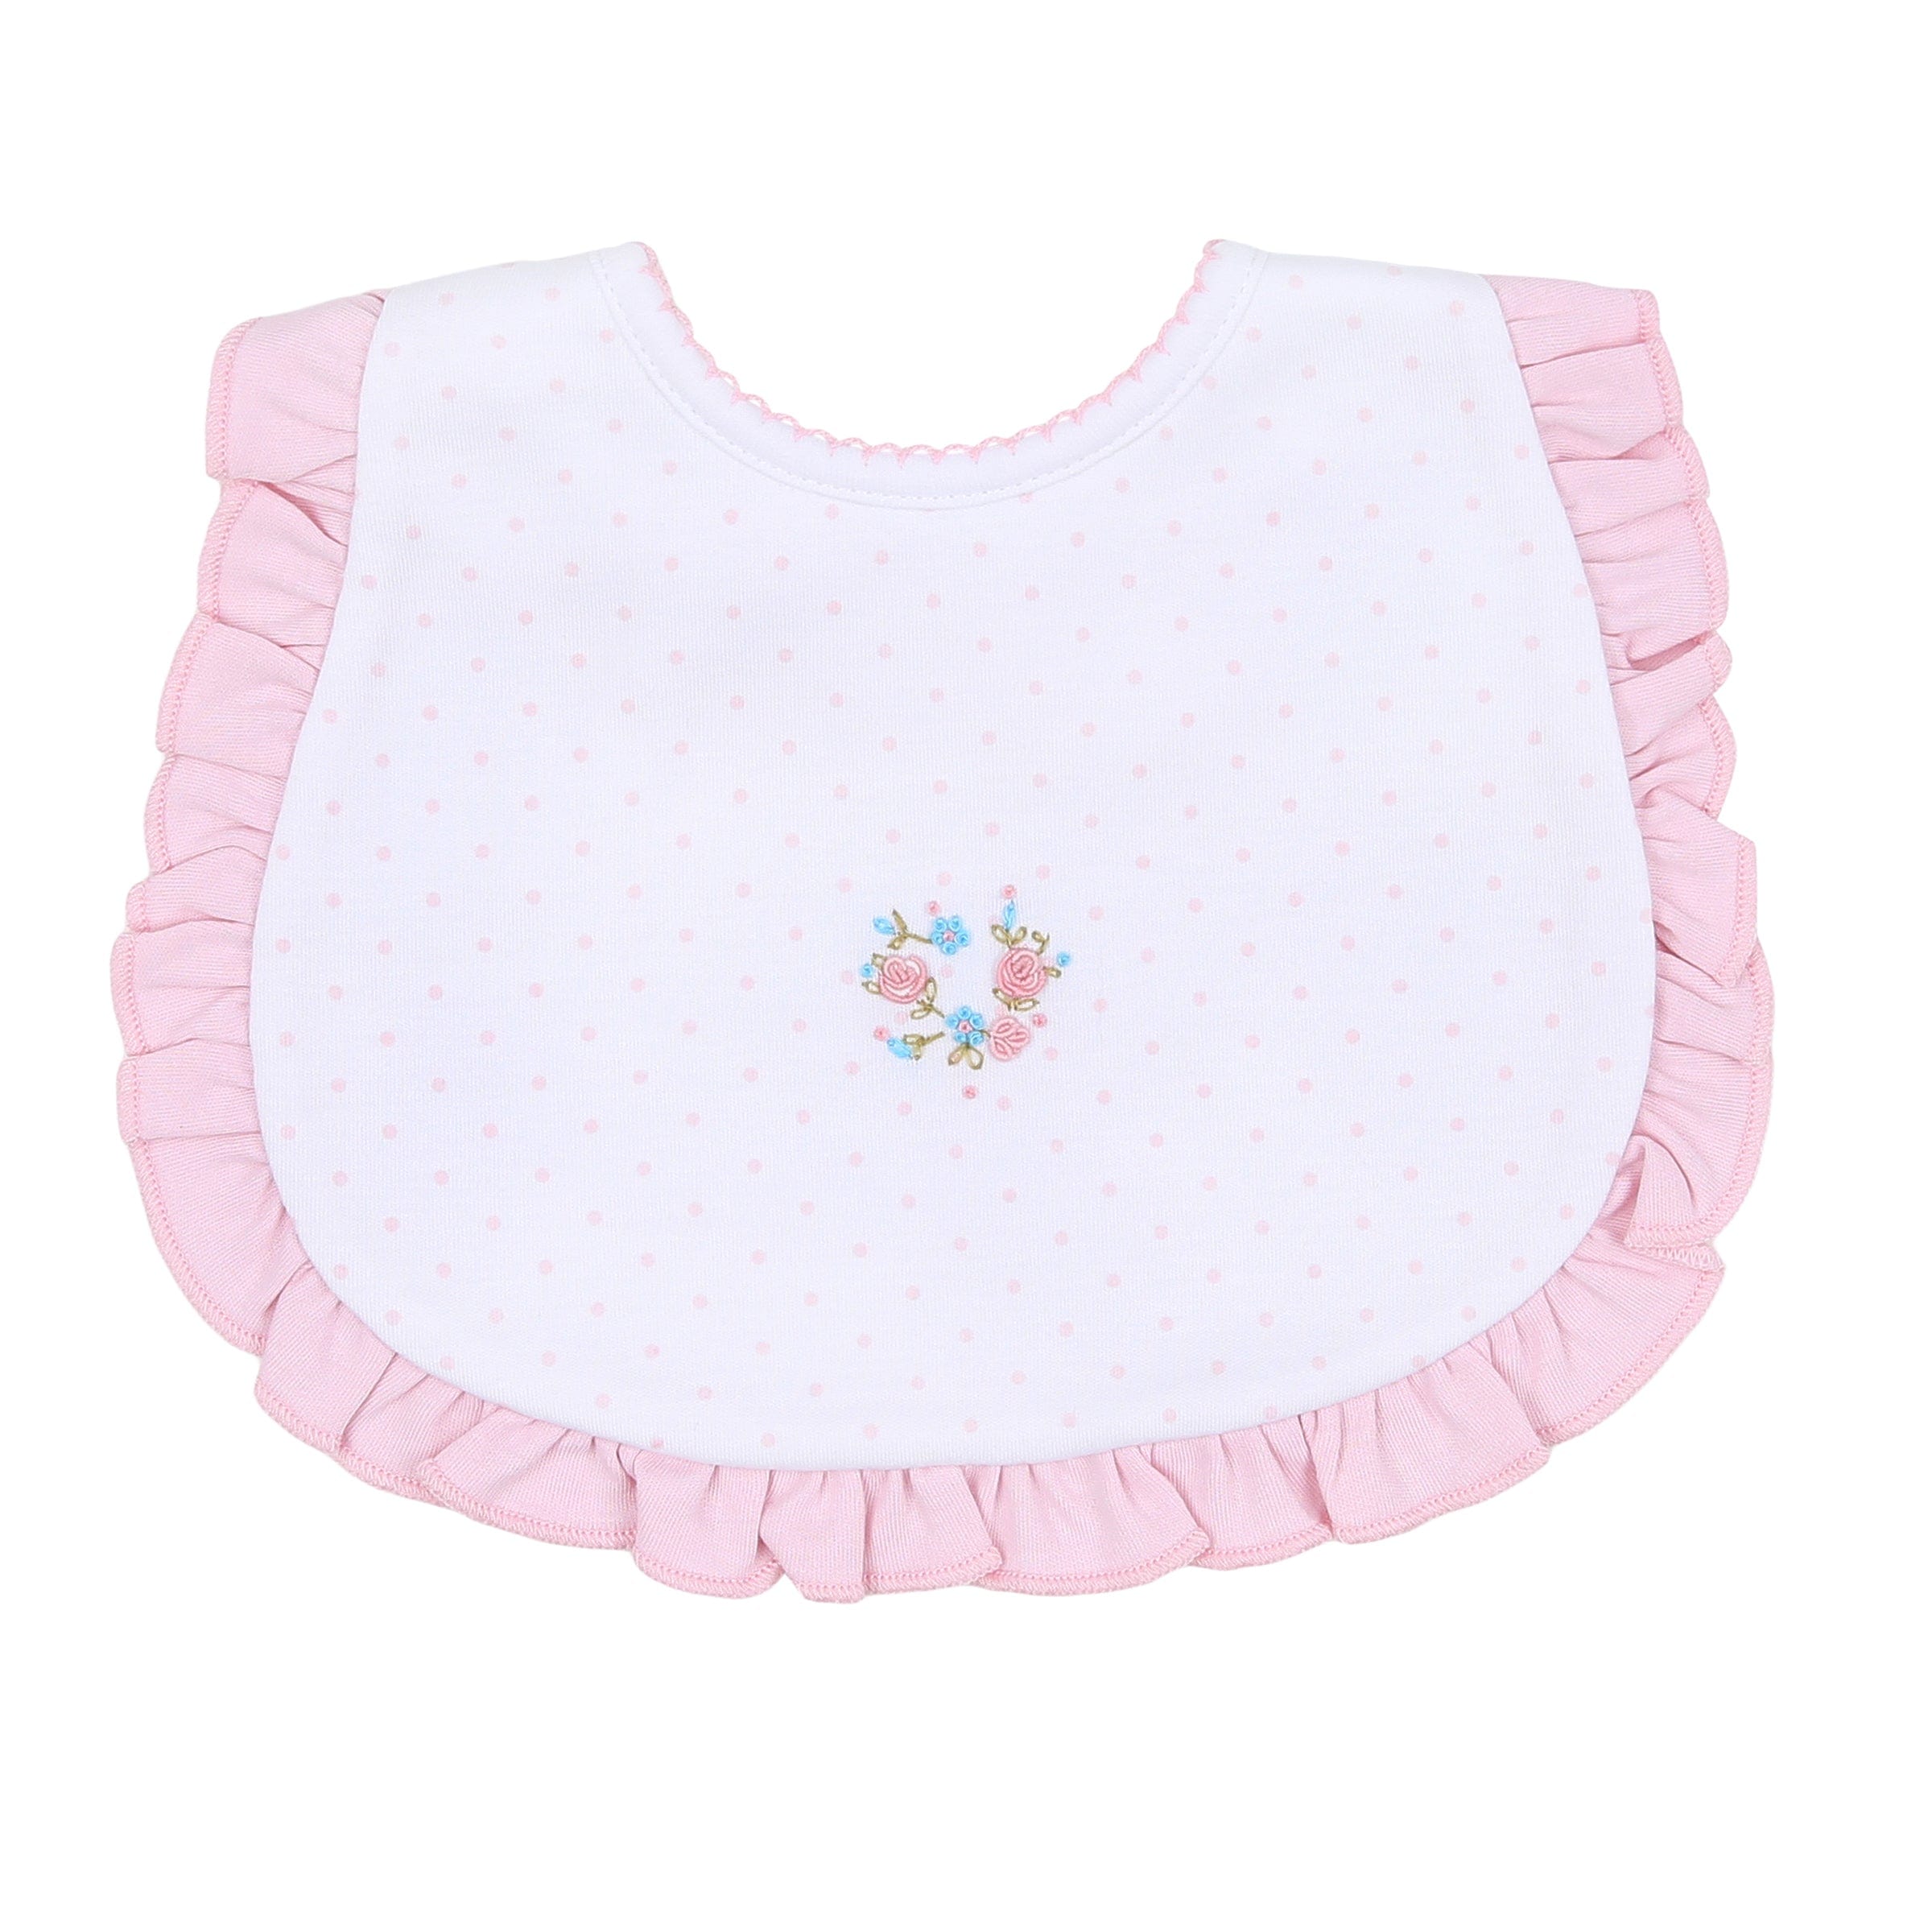 MAGNOLIA BABY - Annalise’s Classics Embroidered Bib - Pink